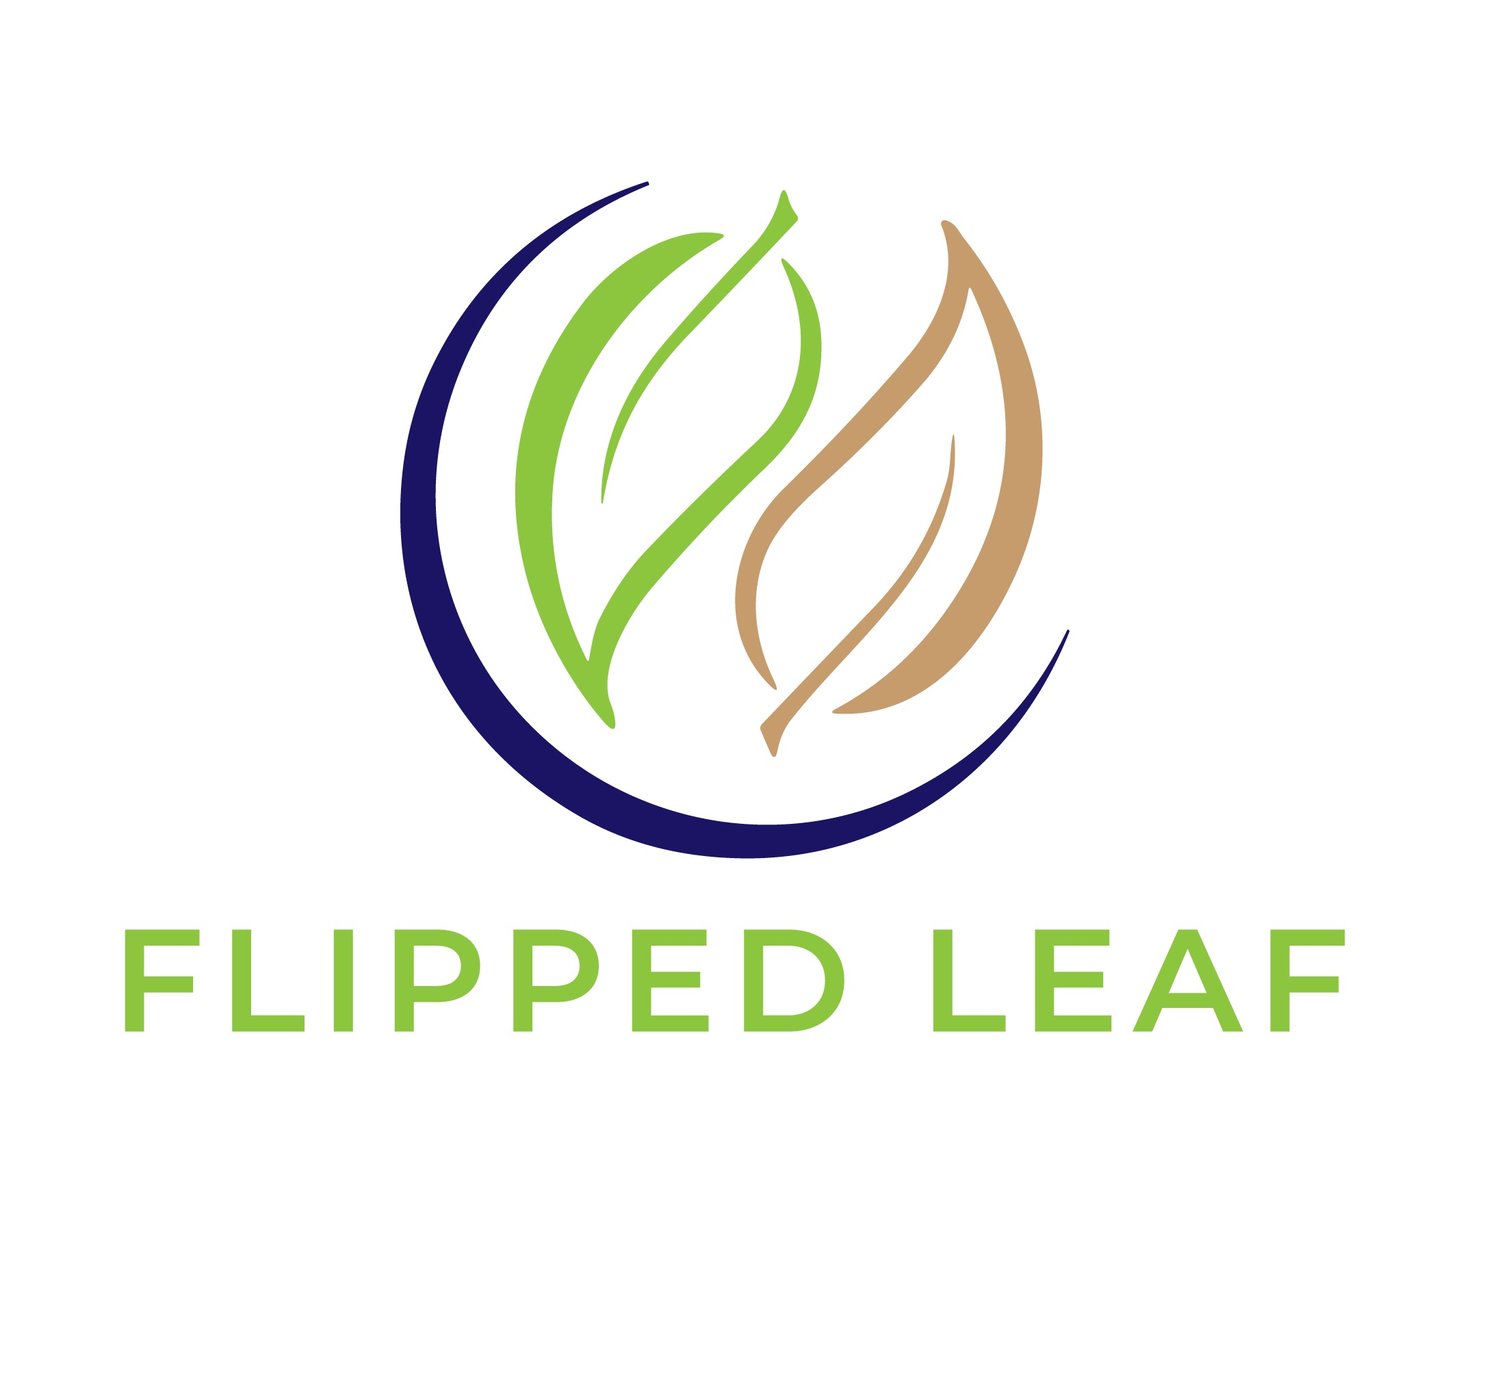 FLIPPED LEAF